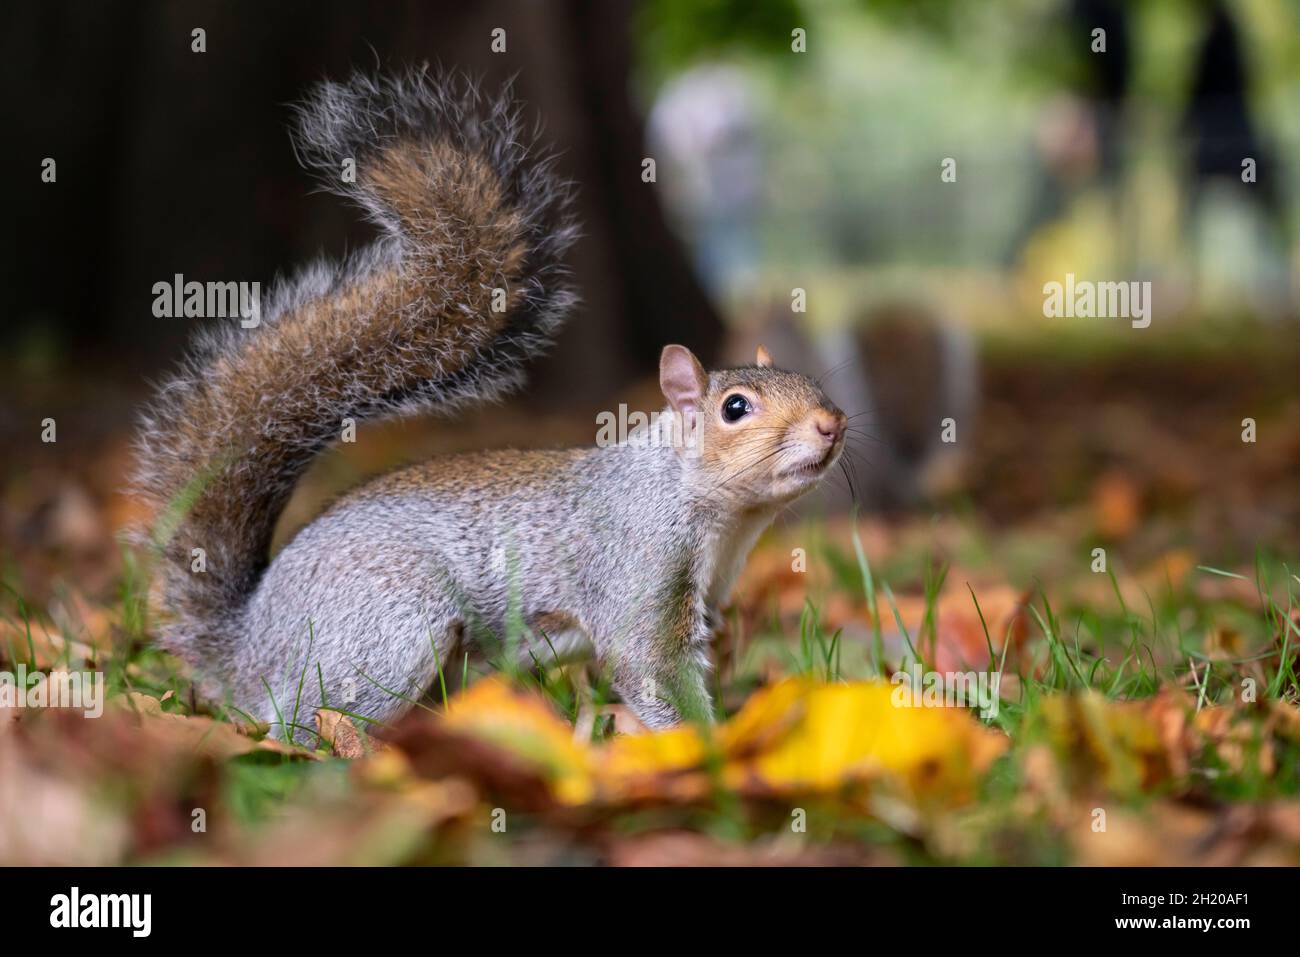 ST JAMES'S PARK, LONDON, UK. 19 October 2021. Grey squirrel in St James's Park, London, UK. Photograph by Richard Holmes. Stock Photo